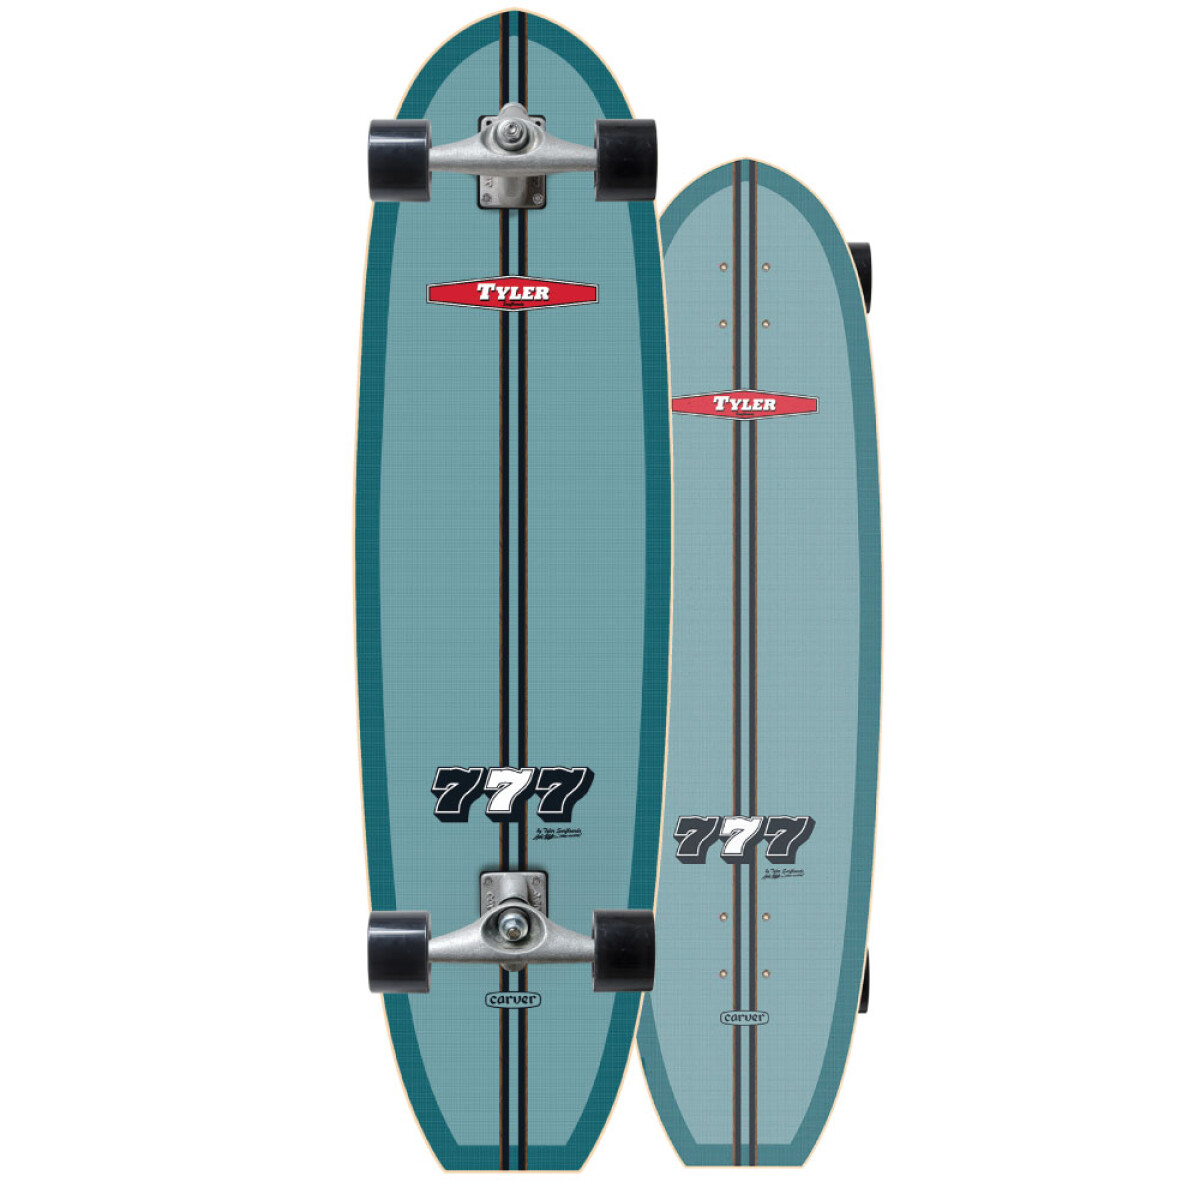 Carver CX Tyler 777 36.5" - Surf Skate Completo 